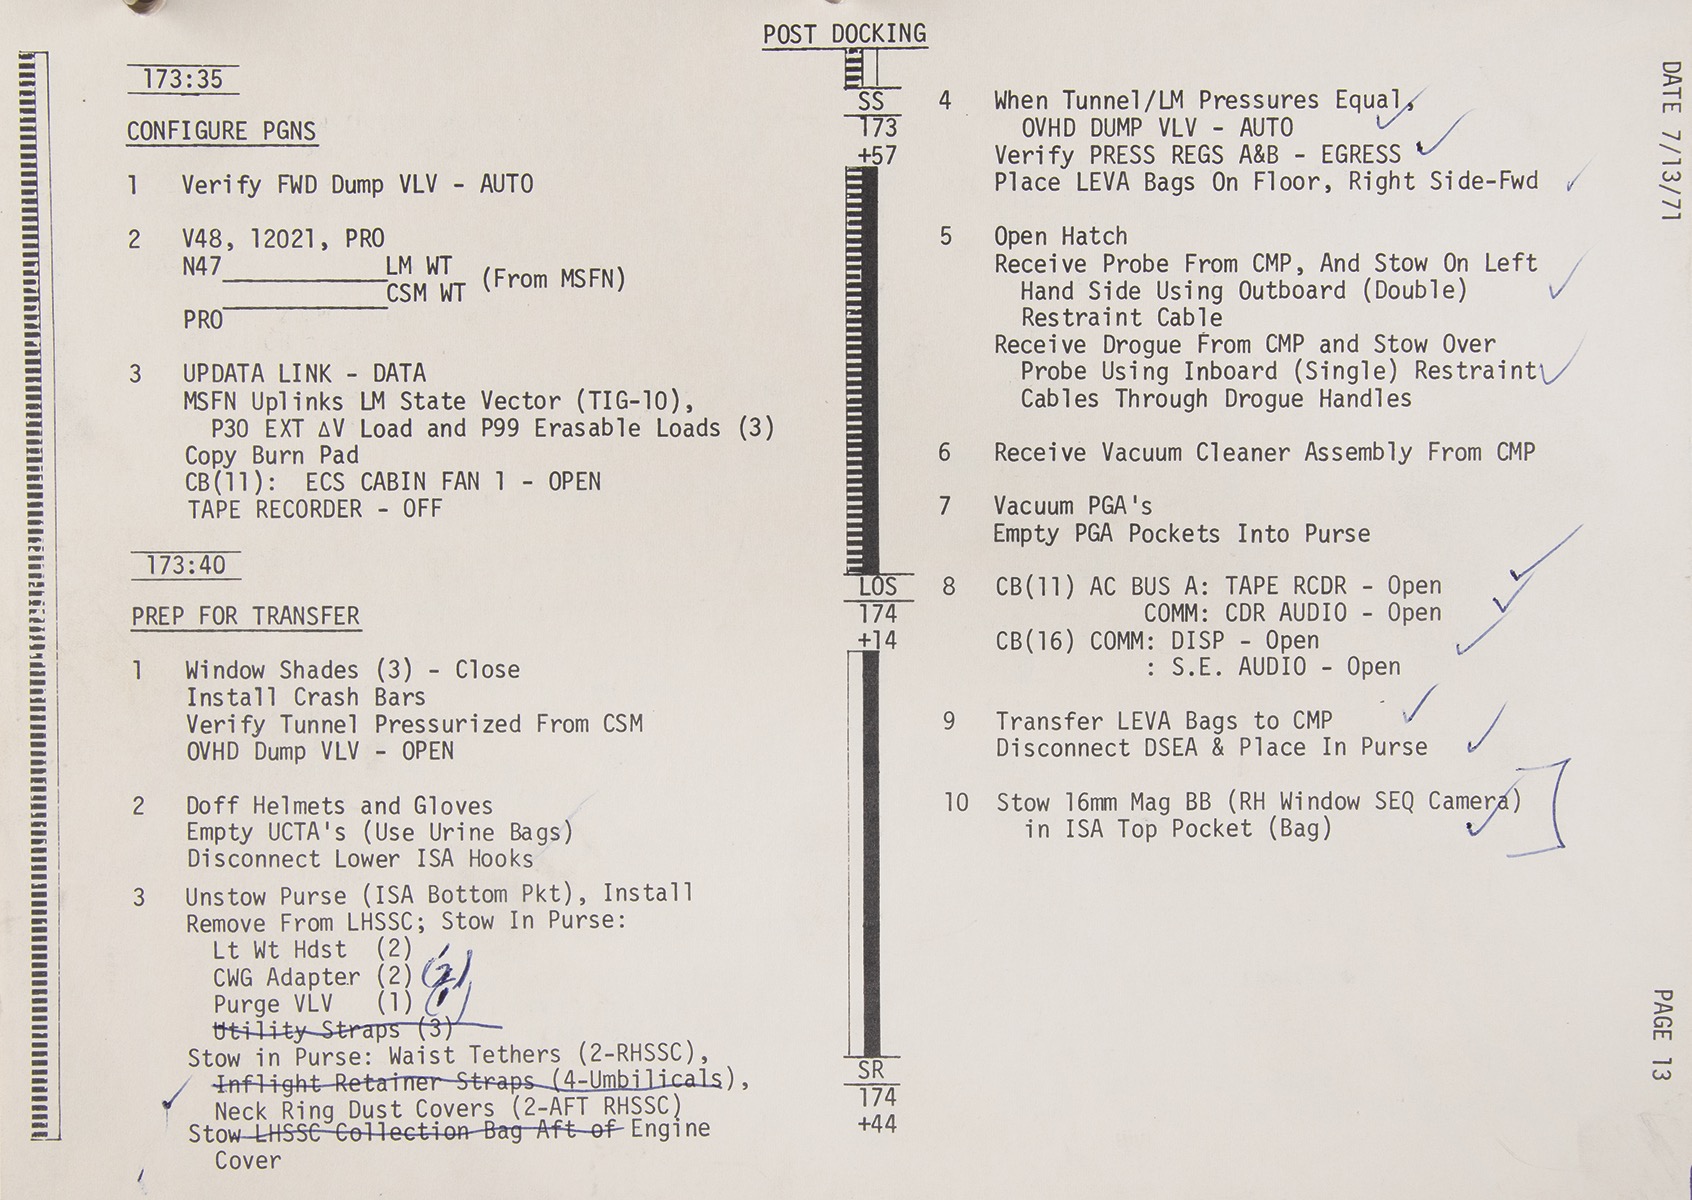 Lot #7901 Dave Scott's Apollo 15 Flown LM Timeline Book - Image 7